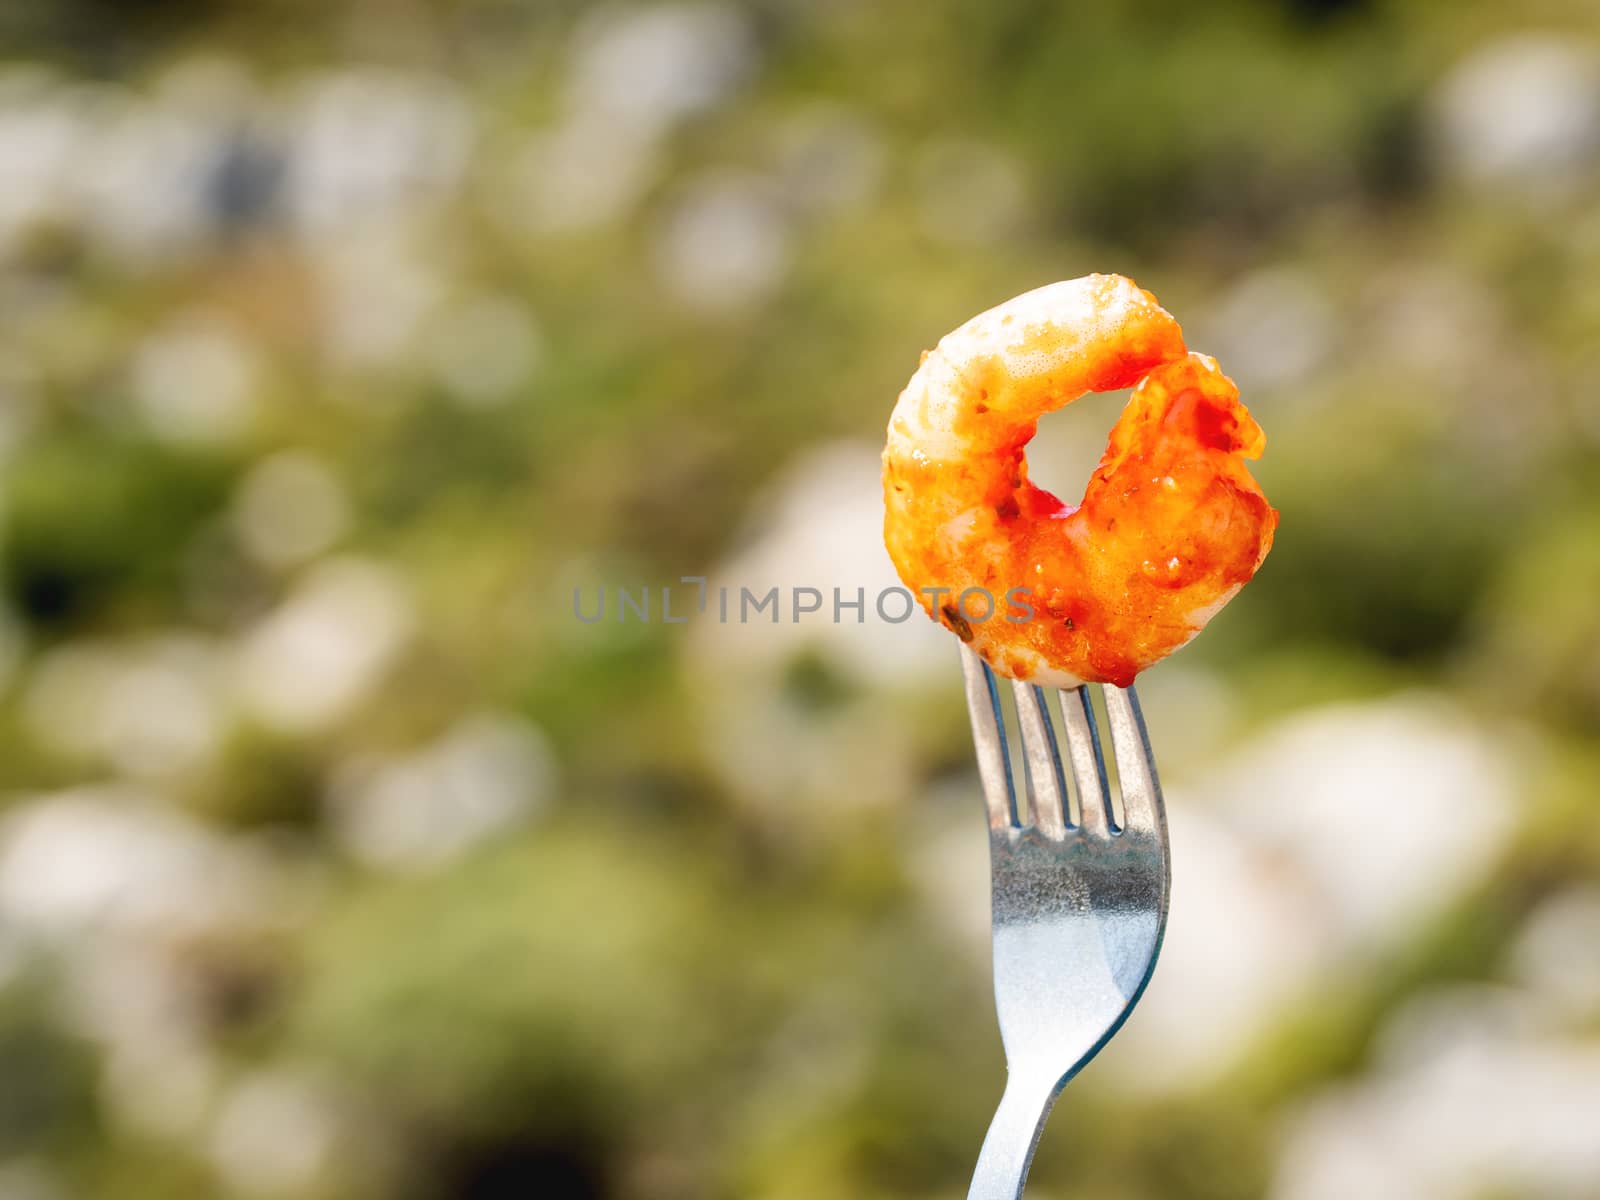 Mediterranean cuisine - freshly roasted shrimp on fork. Seafood on green foliage background. Outdoor picnic. by aksenovko